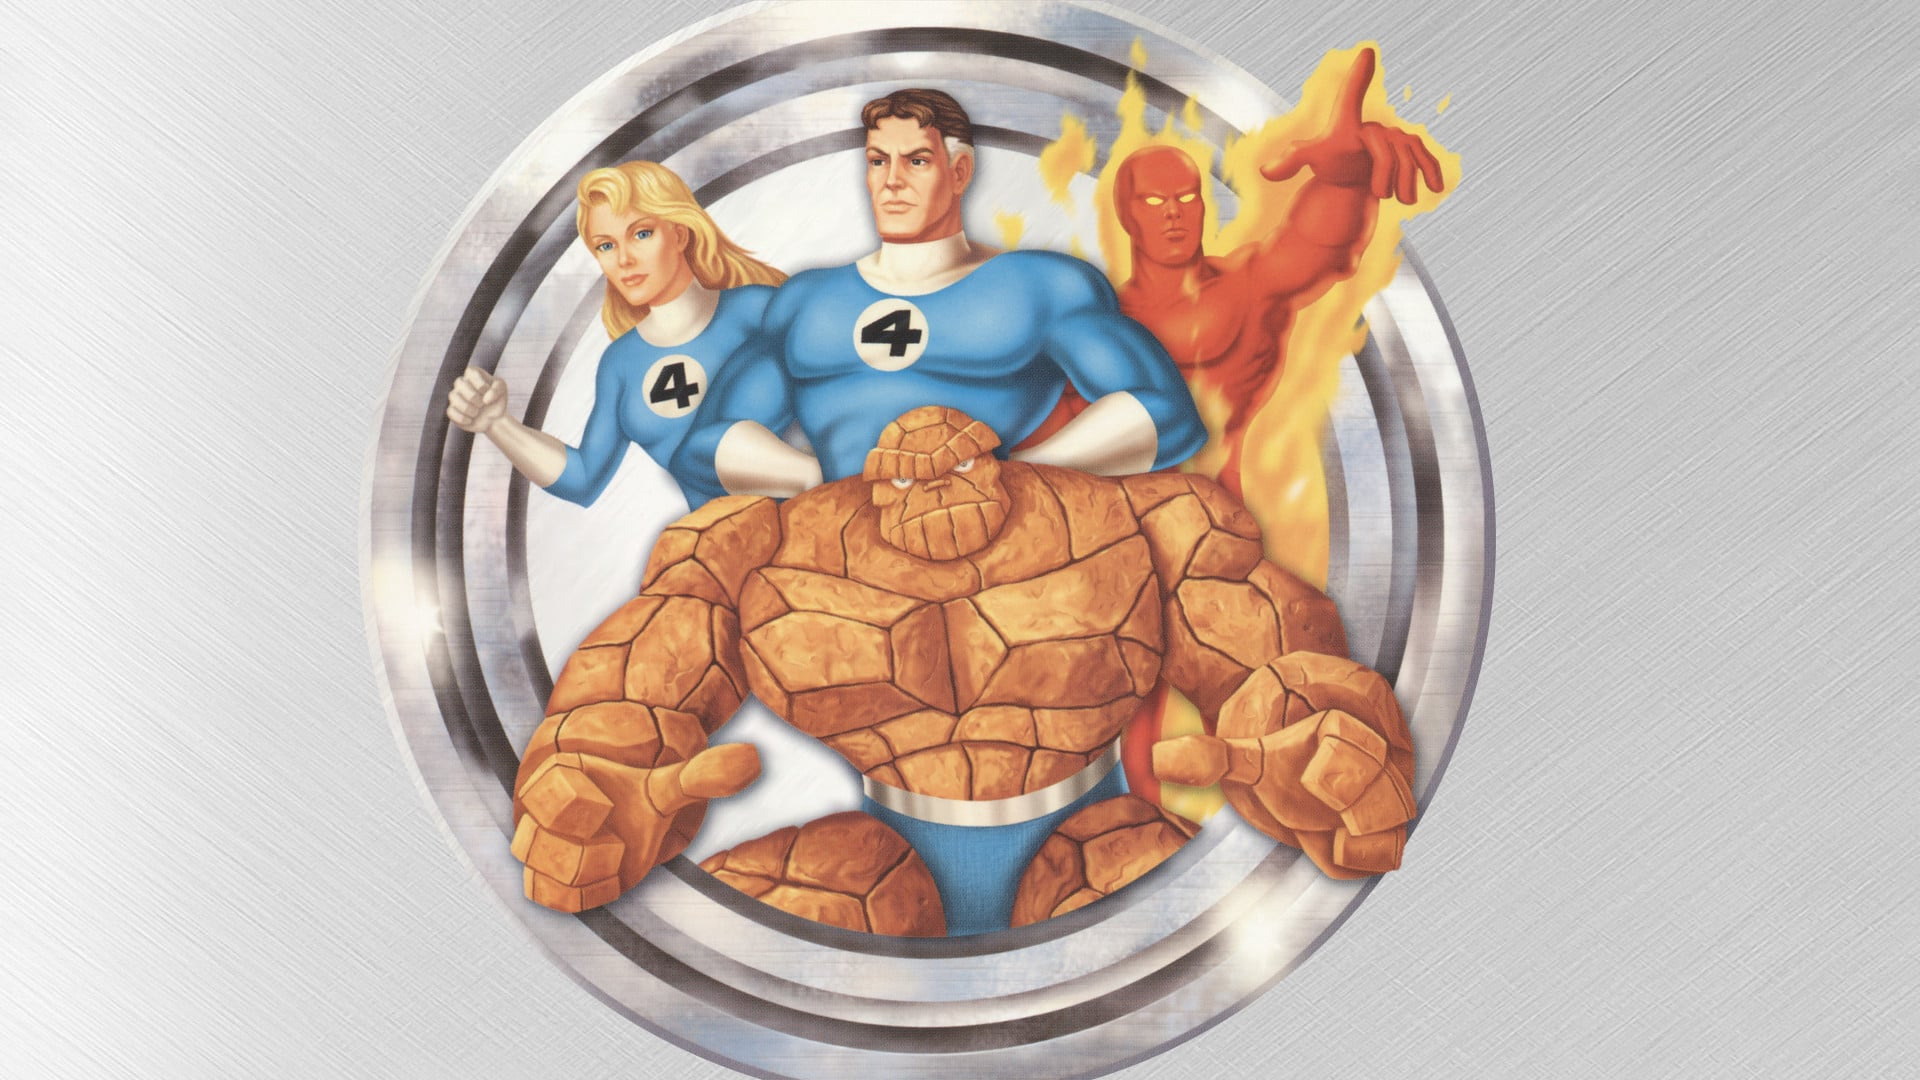 Cartoon The Fantastic Four (1994)